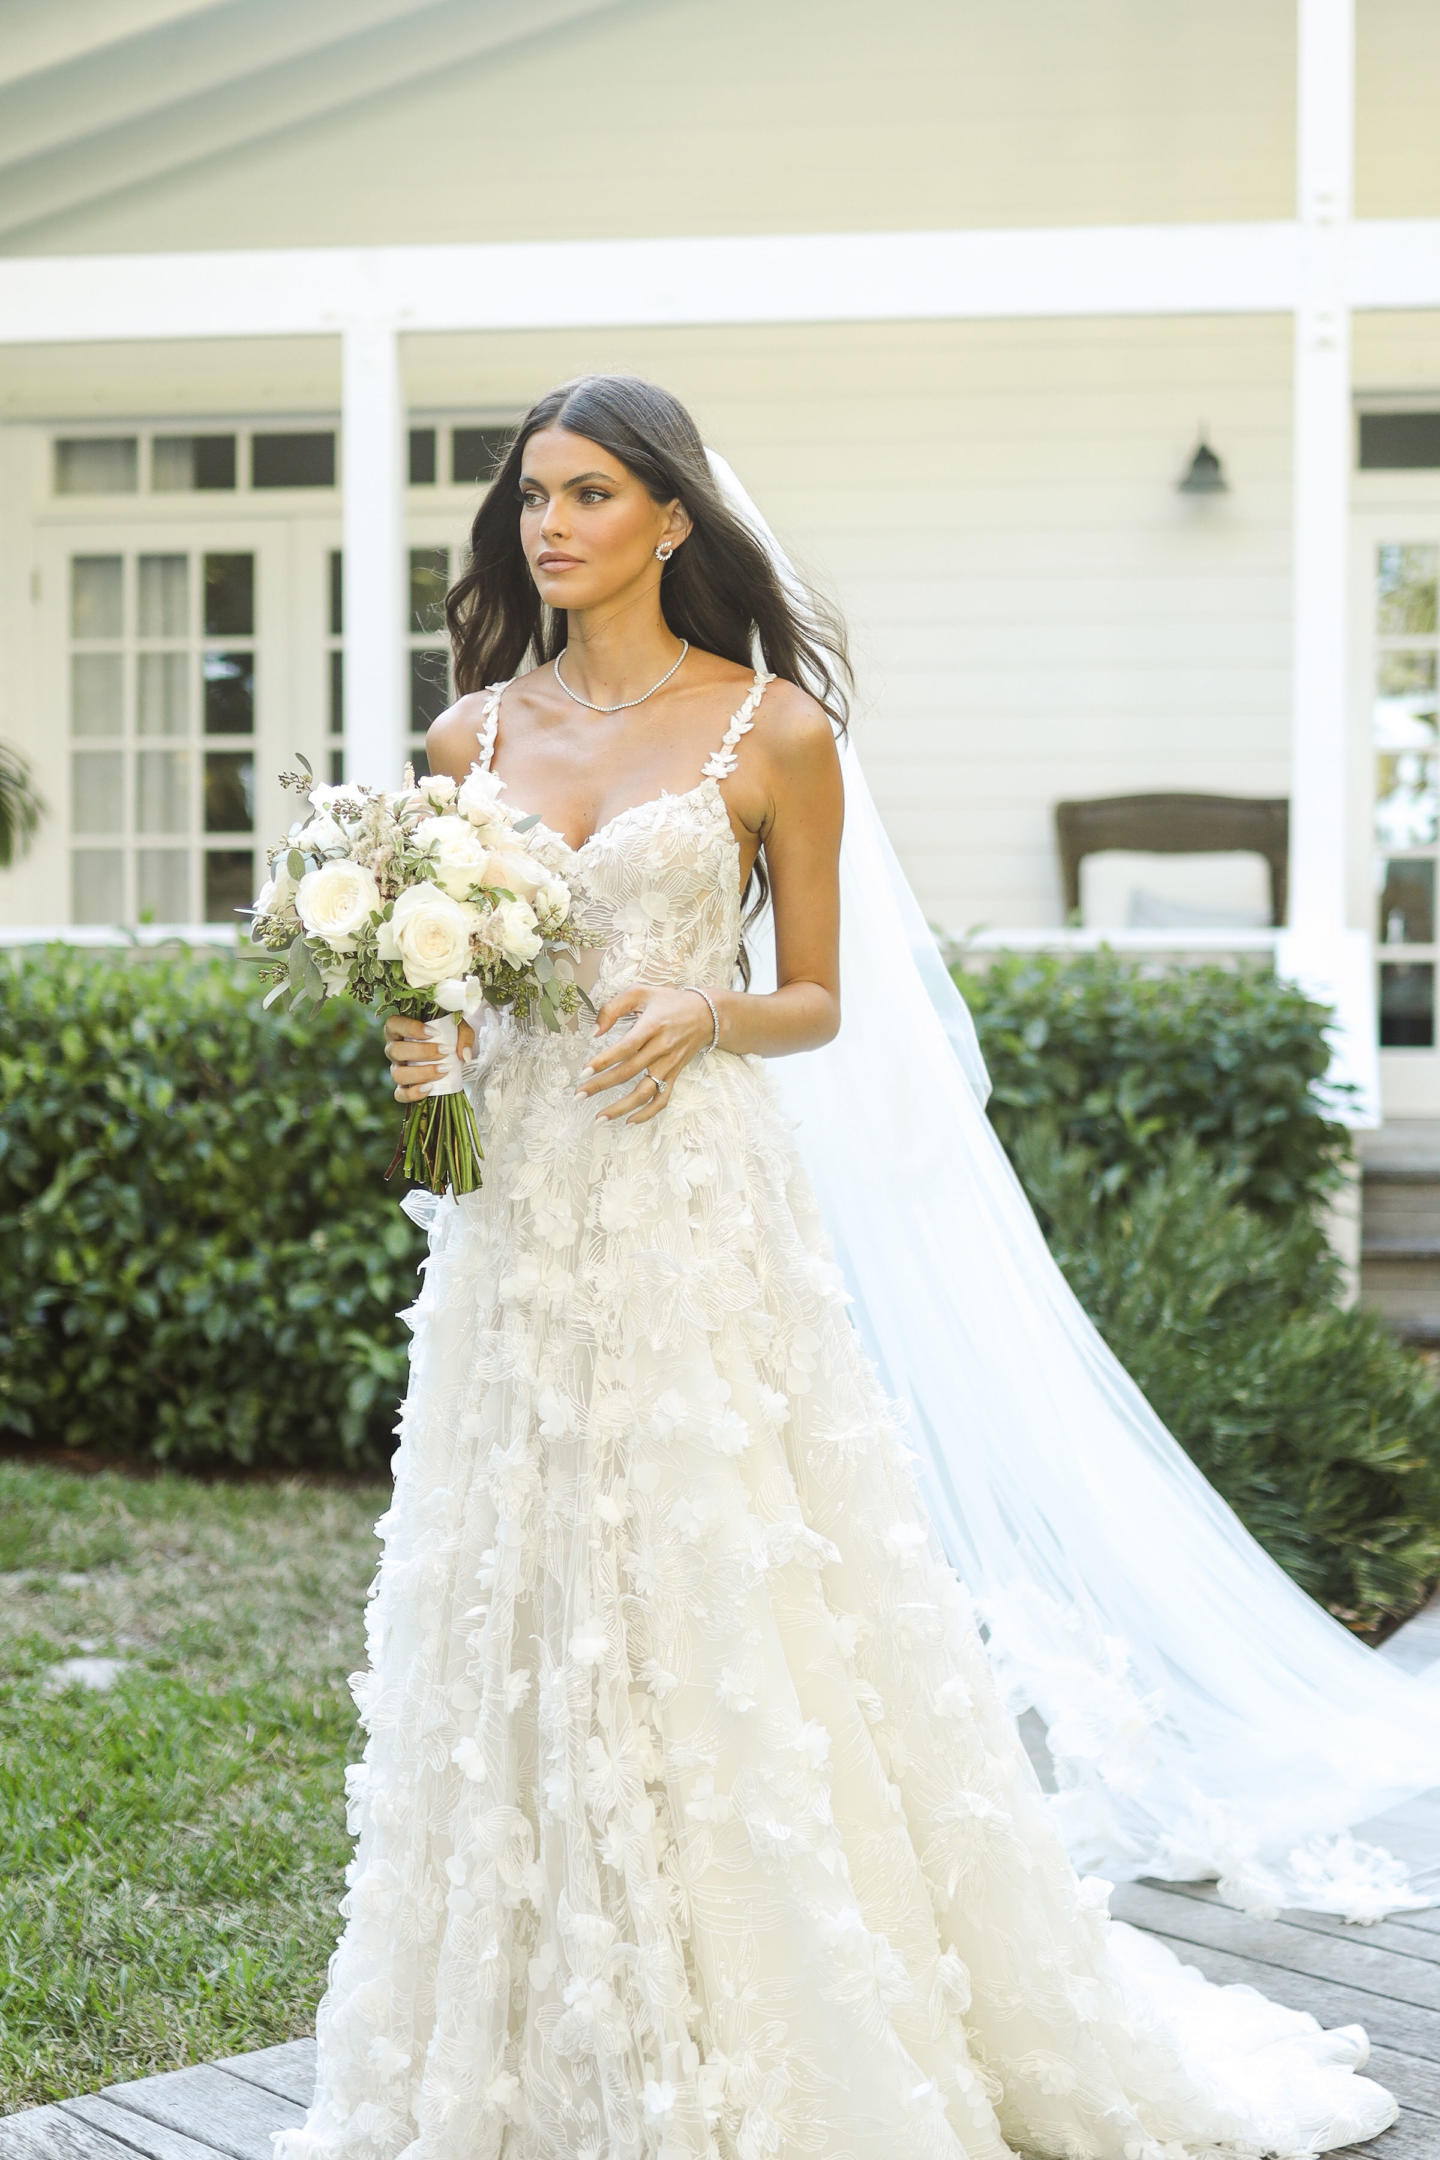 Bride Of The Week: Chloe Lloyd